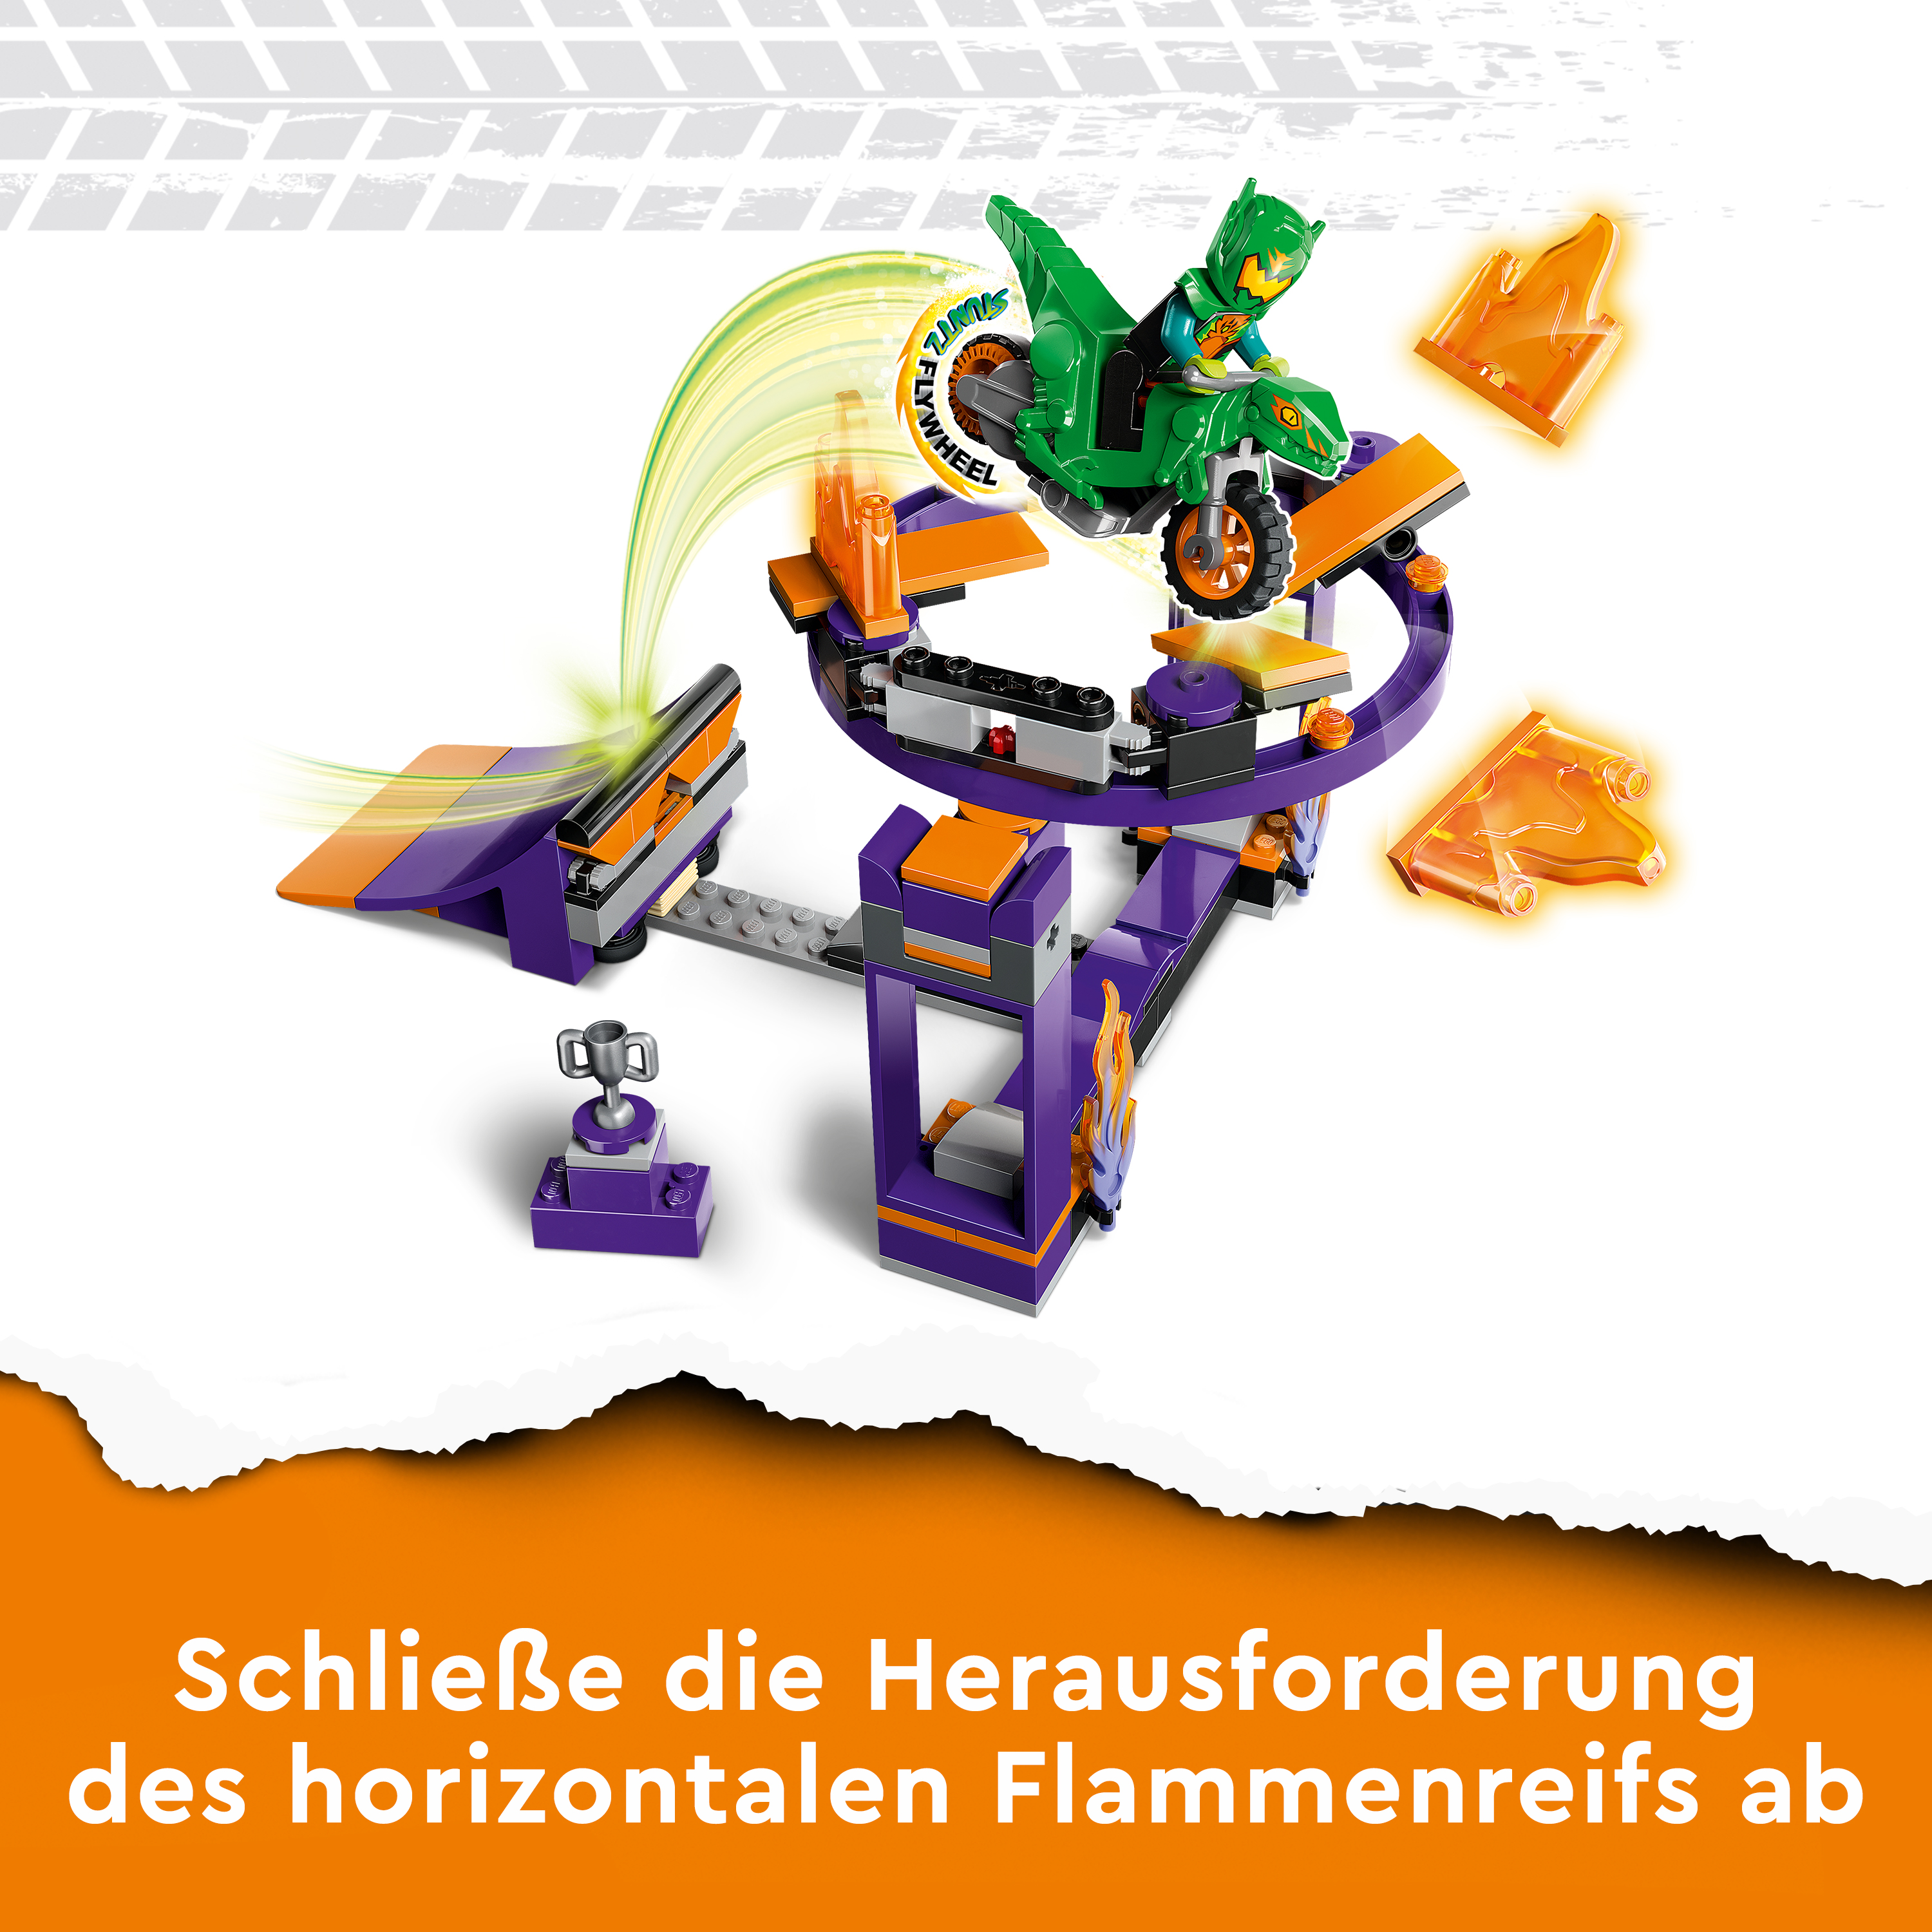 Sturzflug-Challenge 60359 City Stuntz Bausatz, LEGO Mehrfarbig